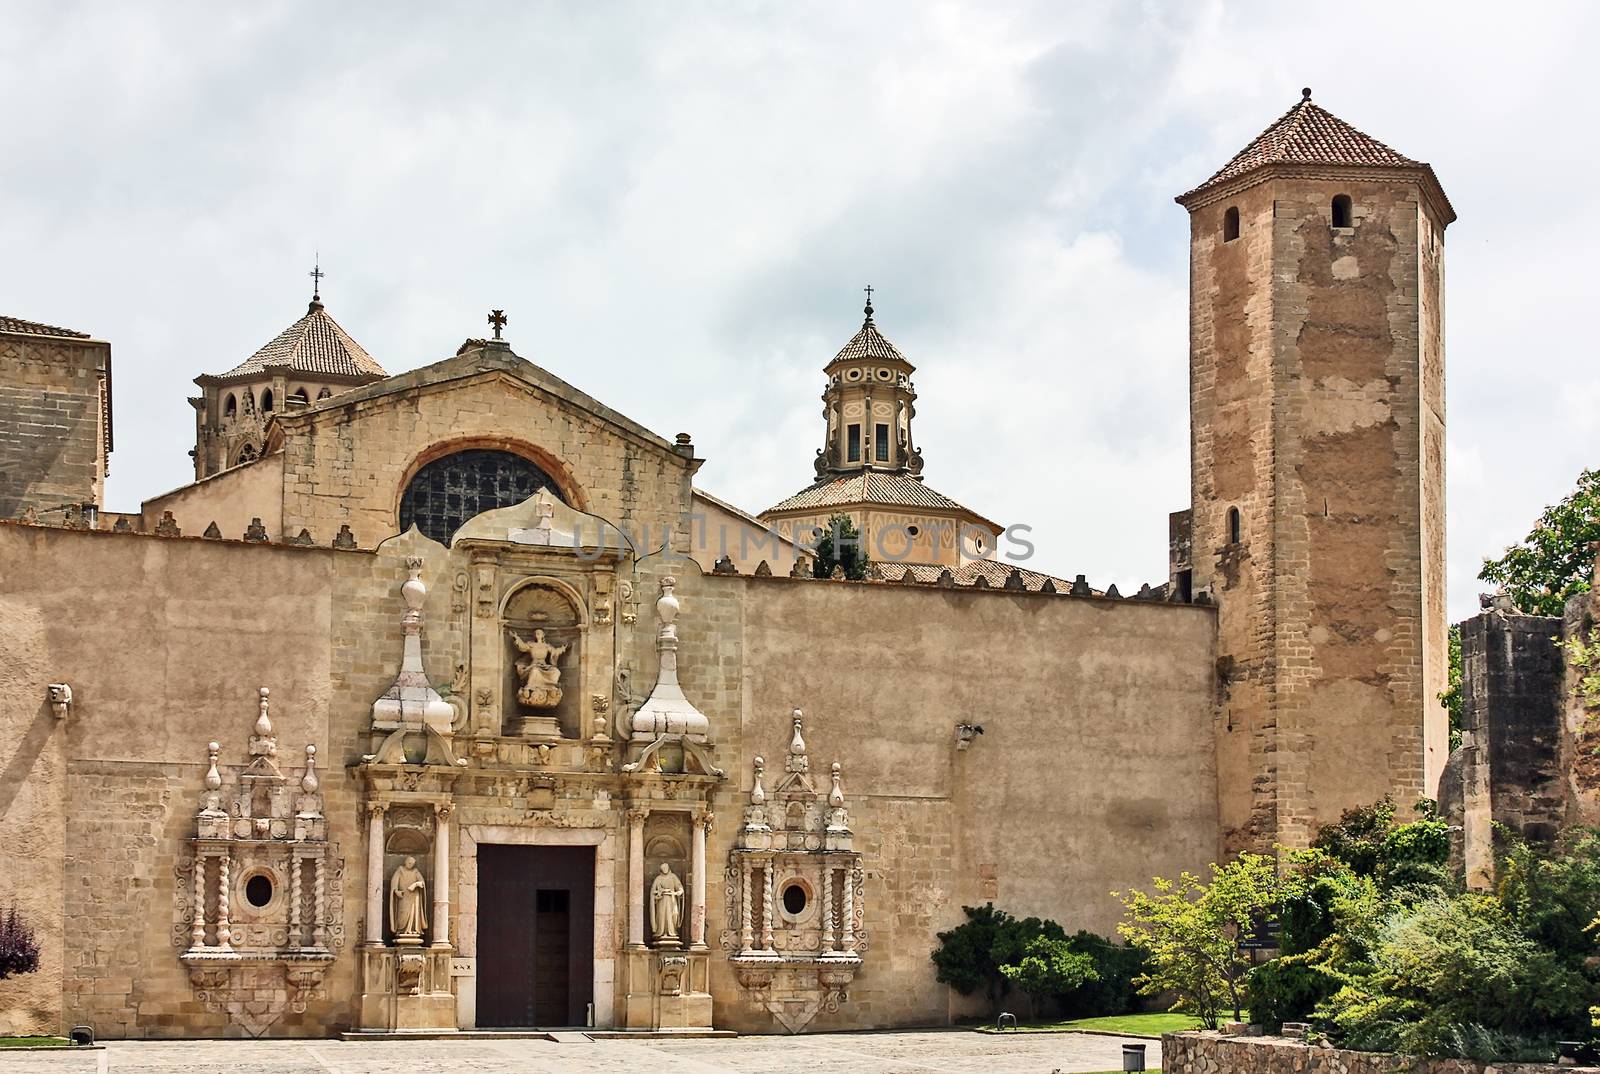 The Monastery of Santa Maria de Poblet,Spain by borisb17